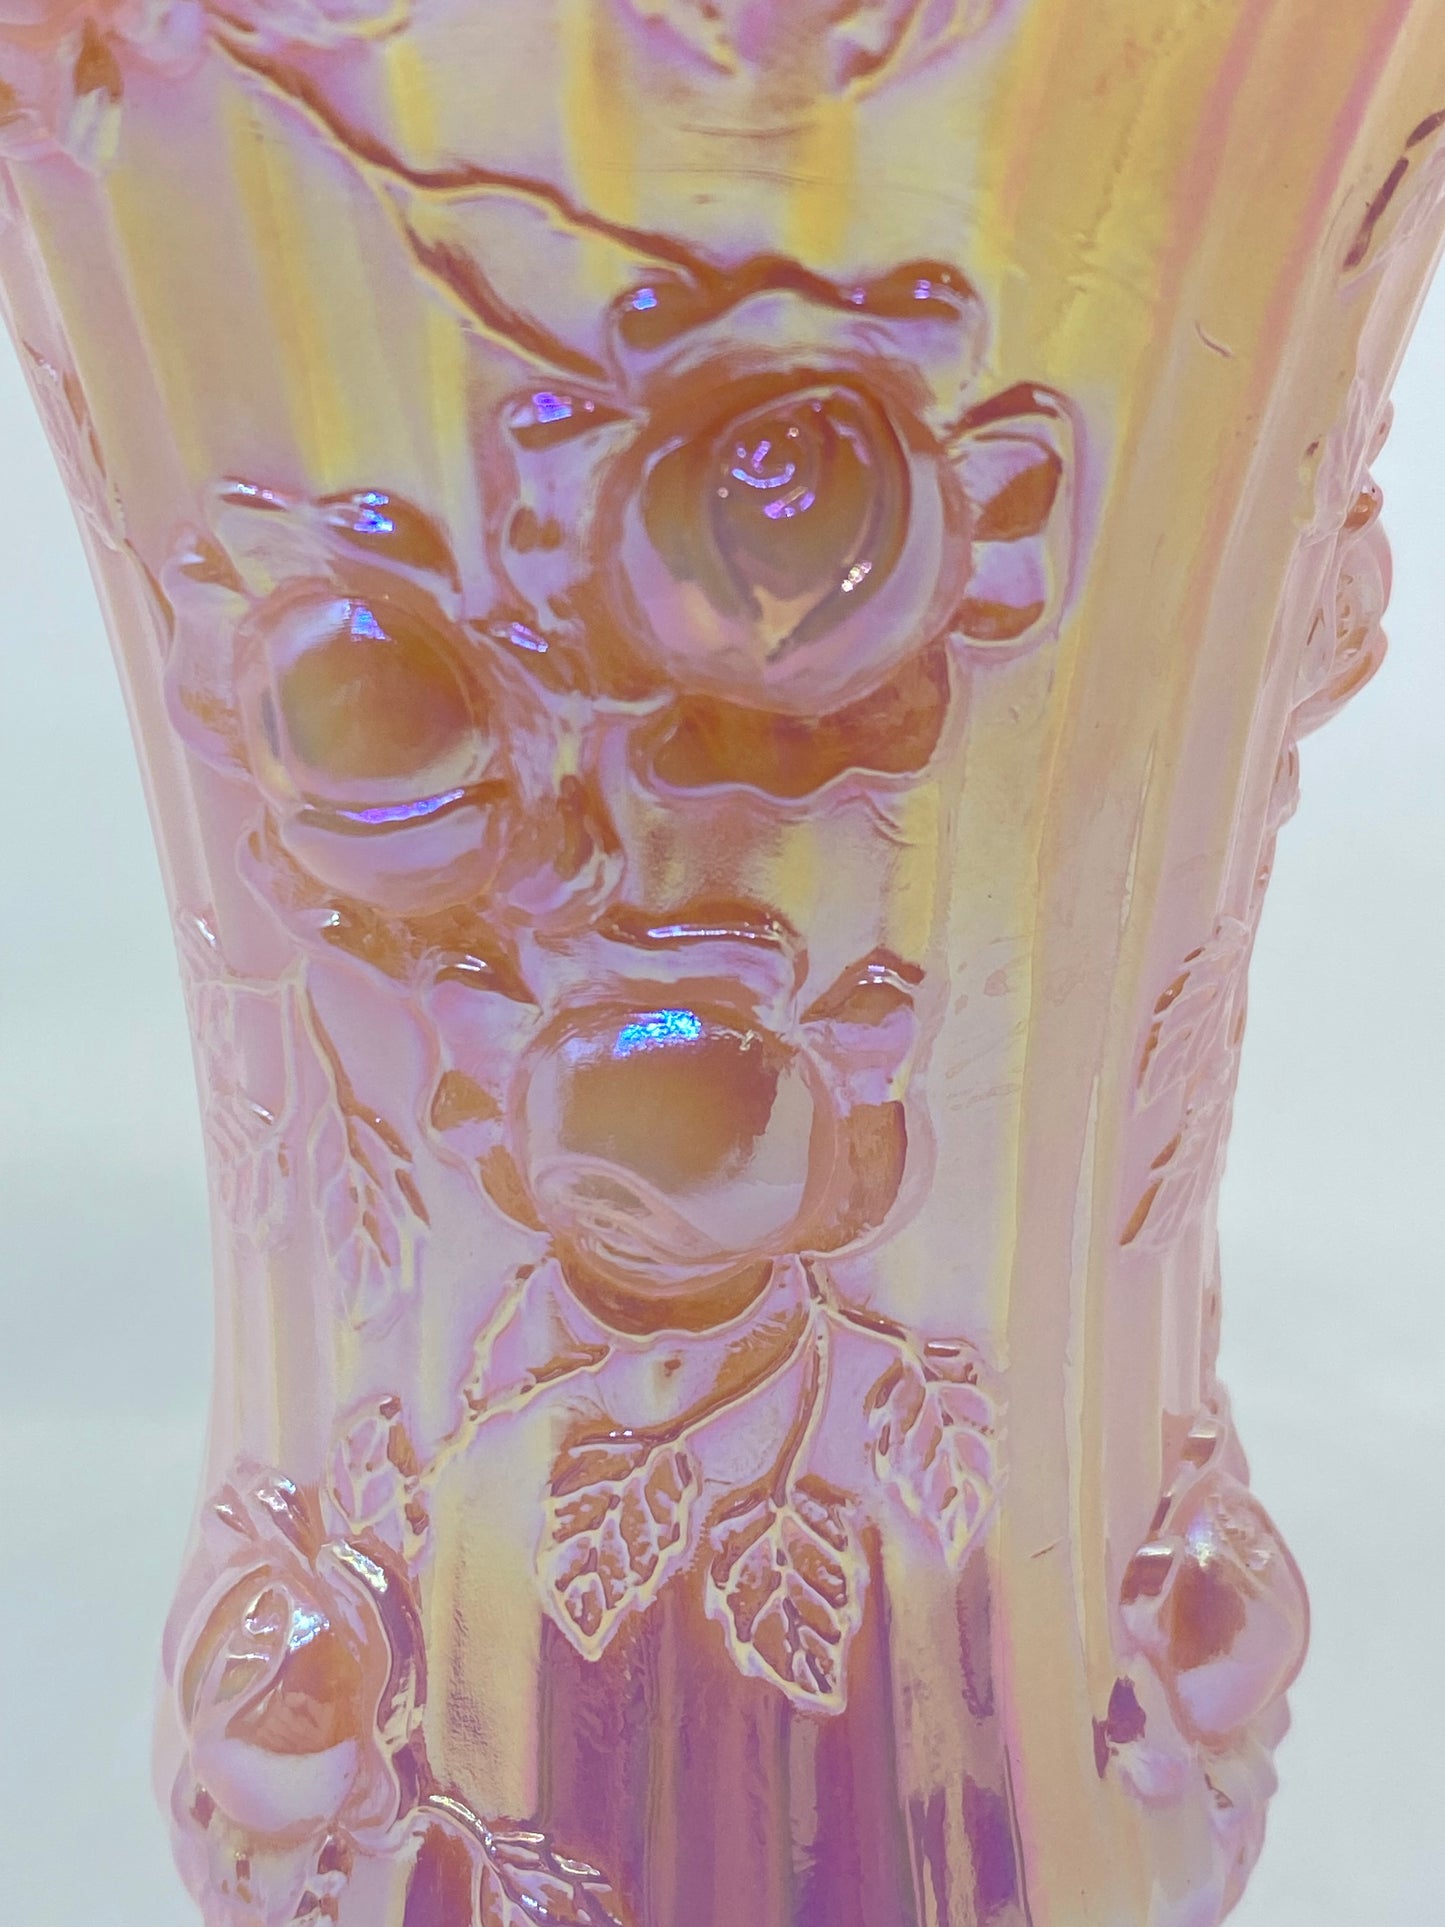 Fenton Pink Opalescent Cabbage Rose Vase - with sticker